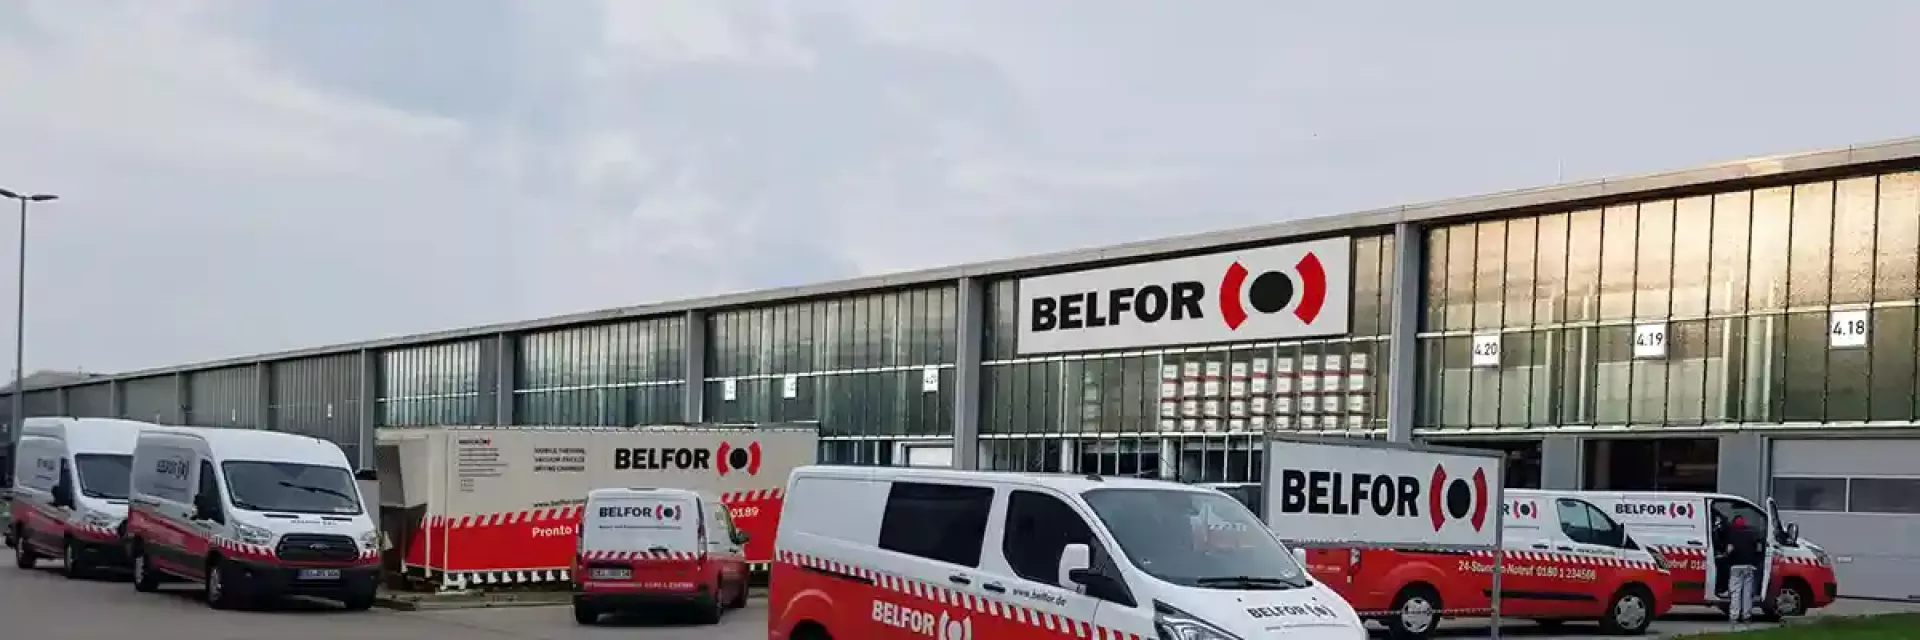 BELFOR wächst im Norden – neue Niederlassung in Bremen